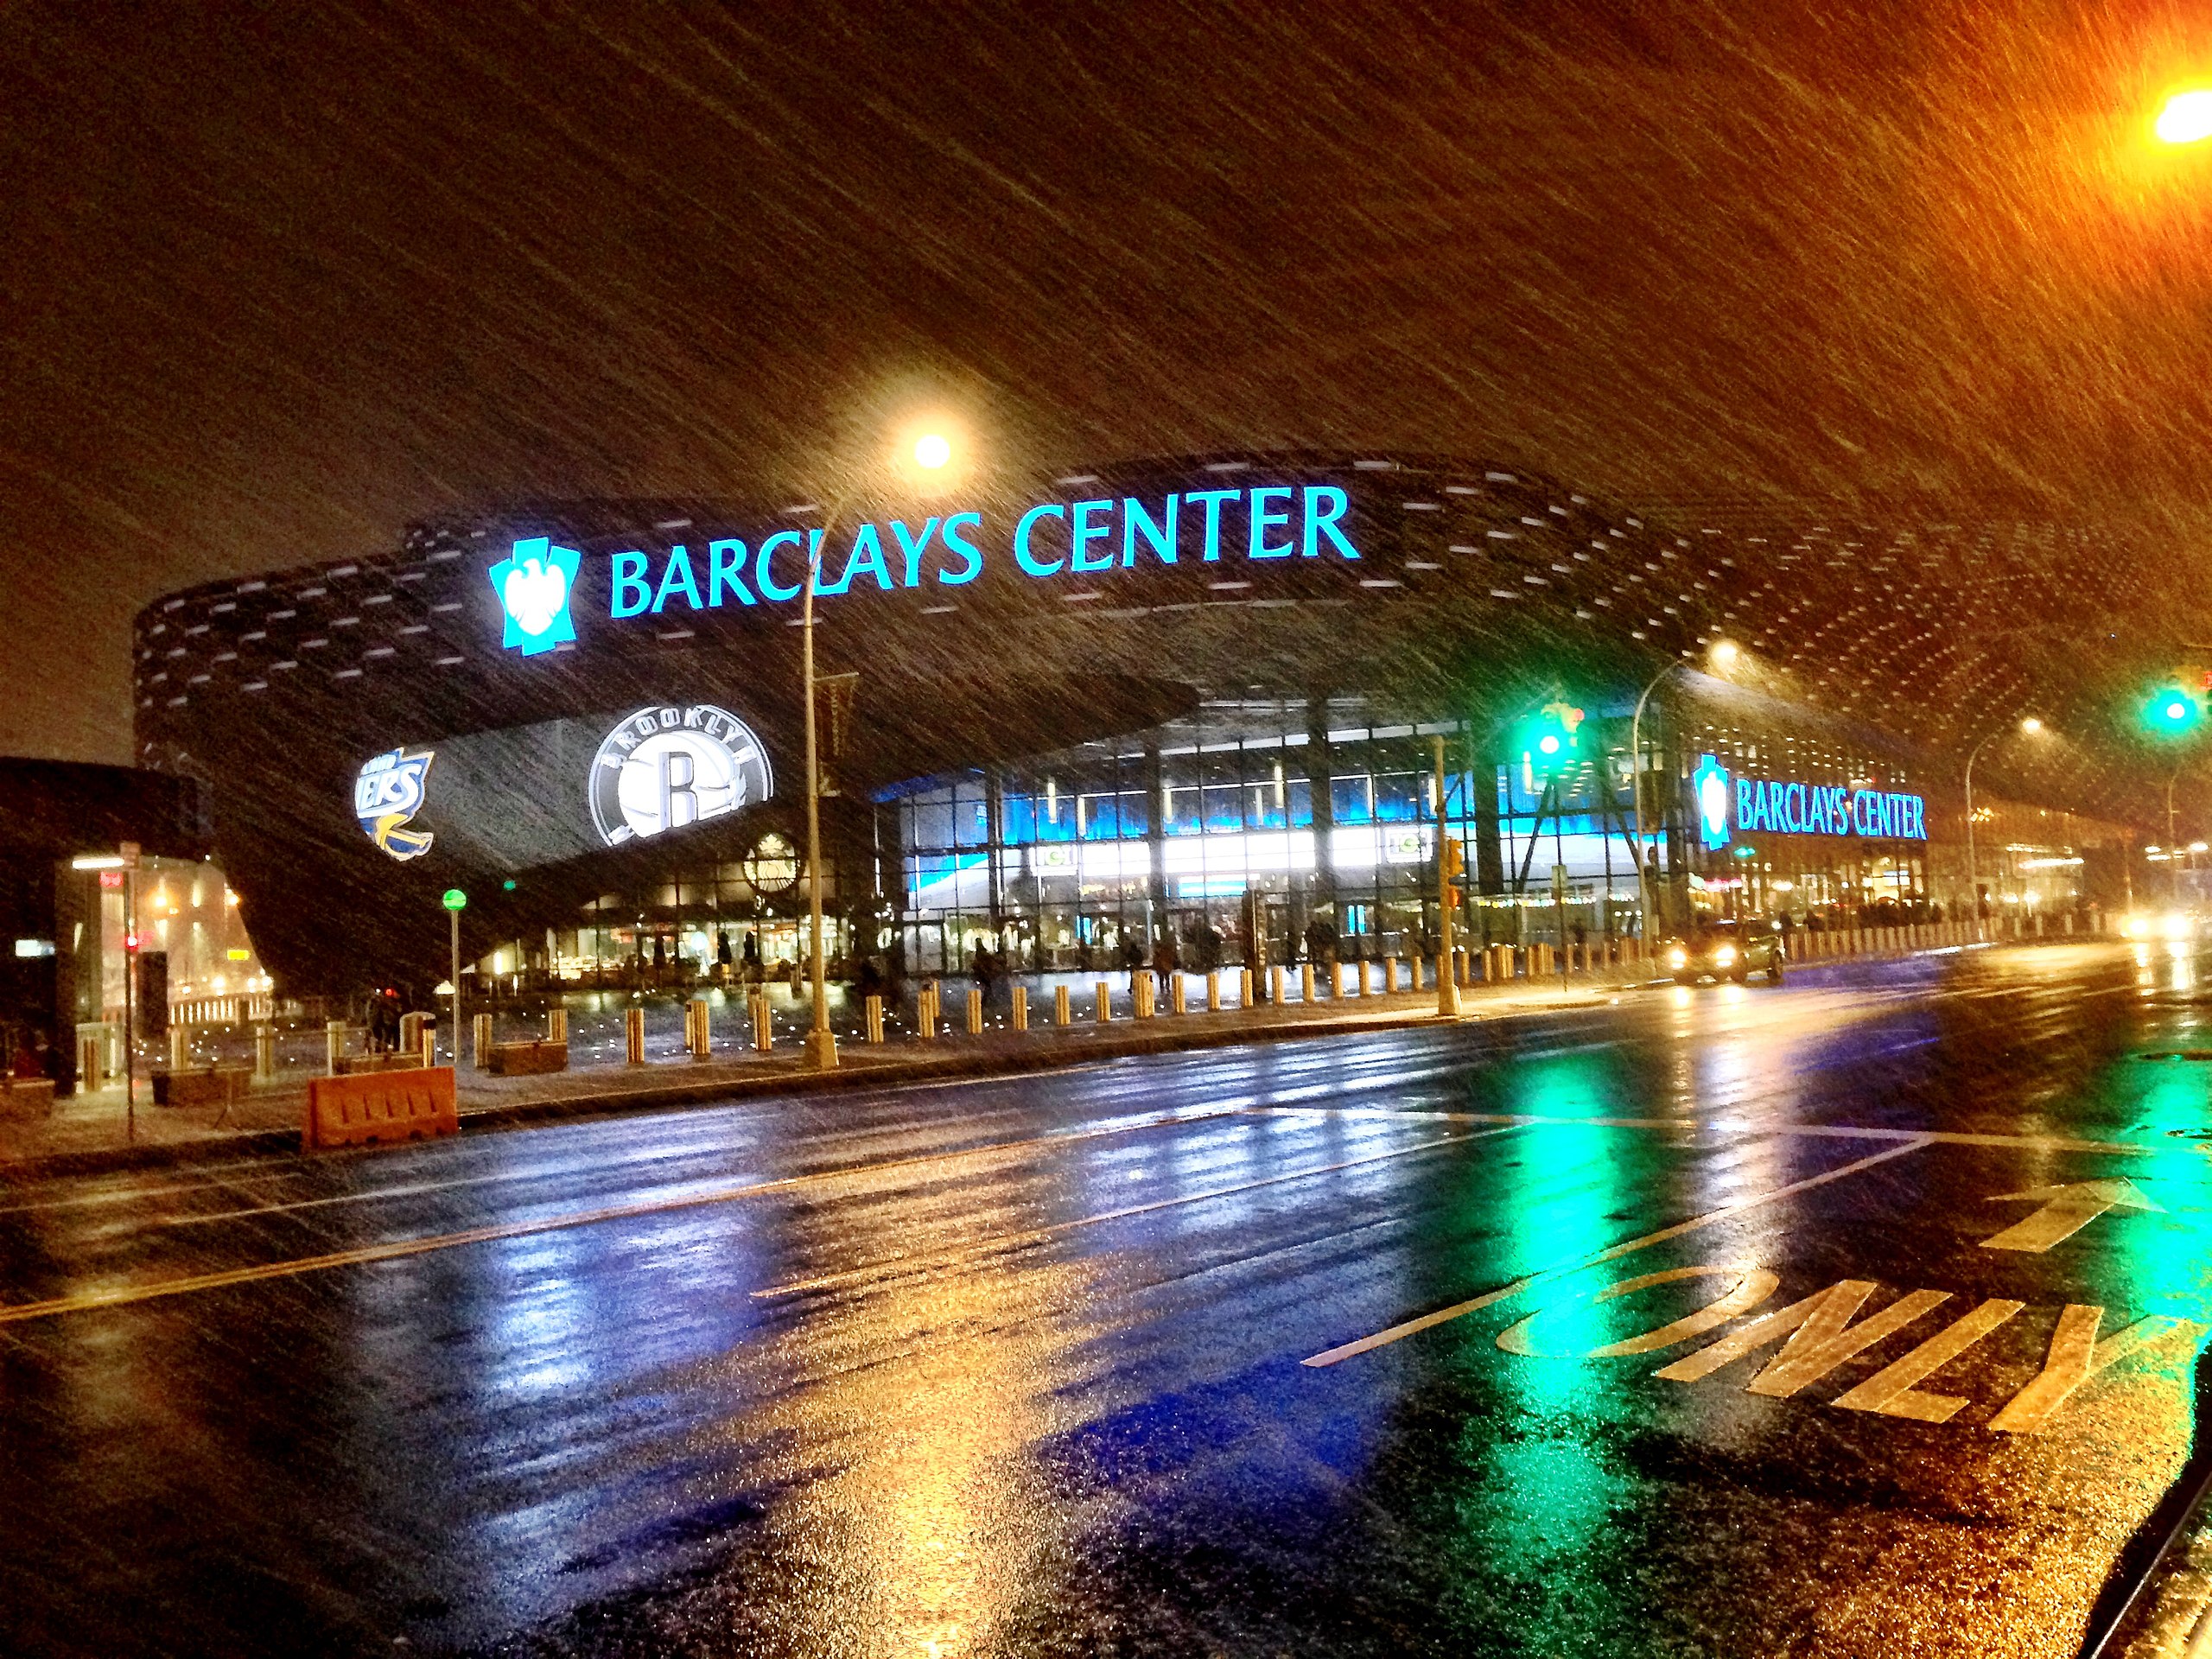 File:Barclays Center Rain Night.jpg - Wikipedia